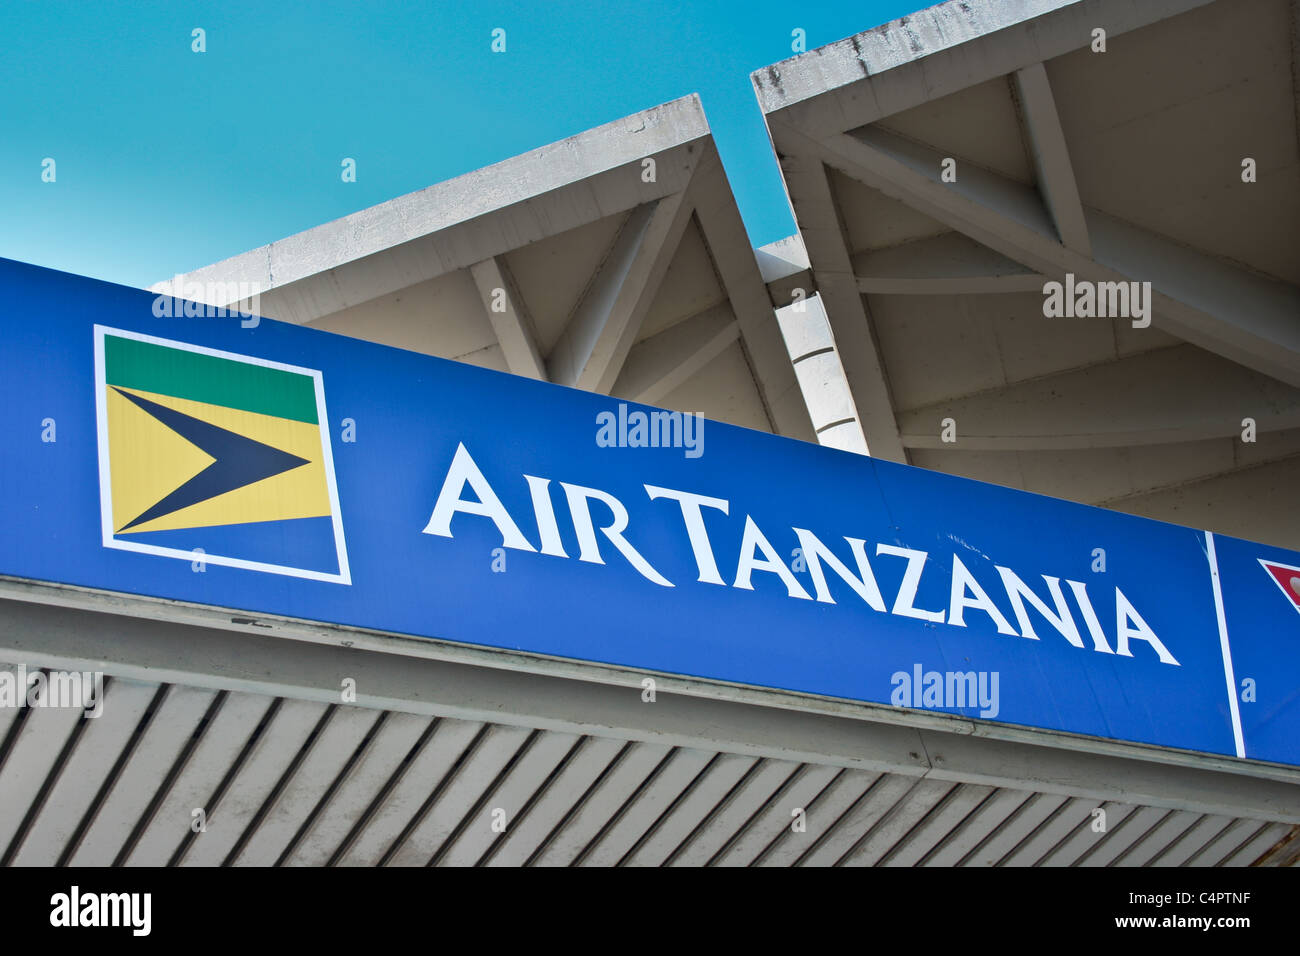 Air Tanzania sign logo airport Stock Photo